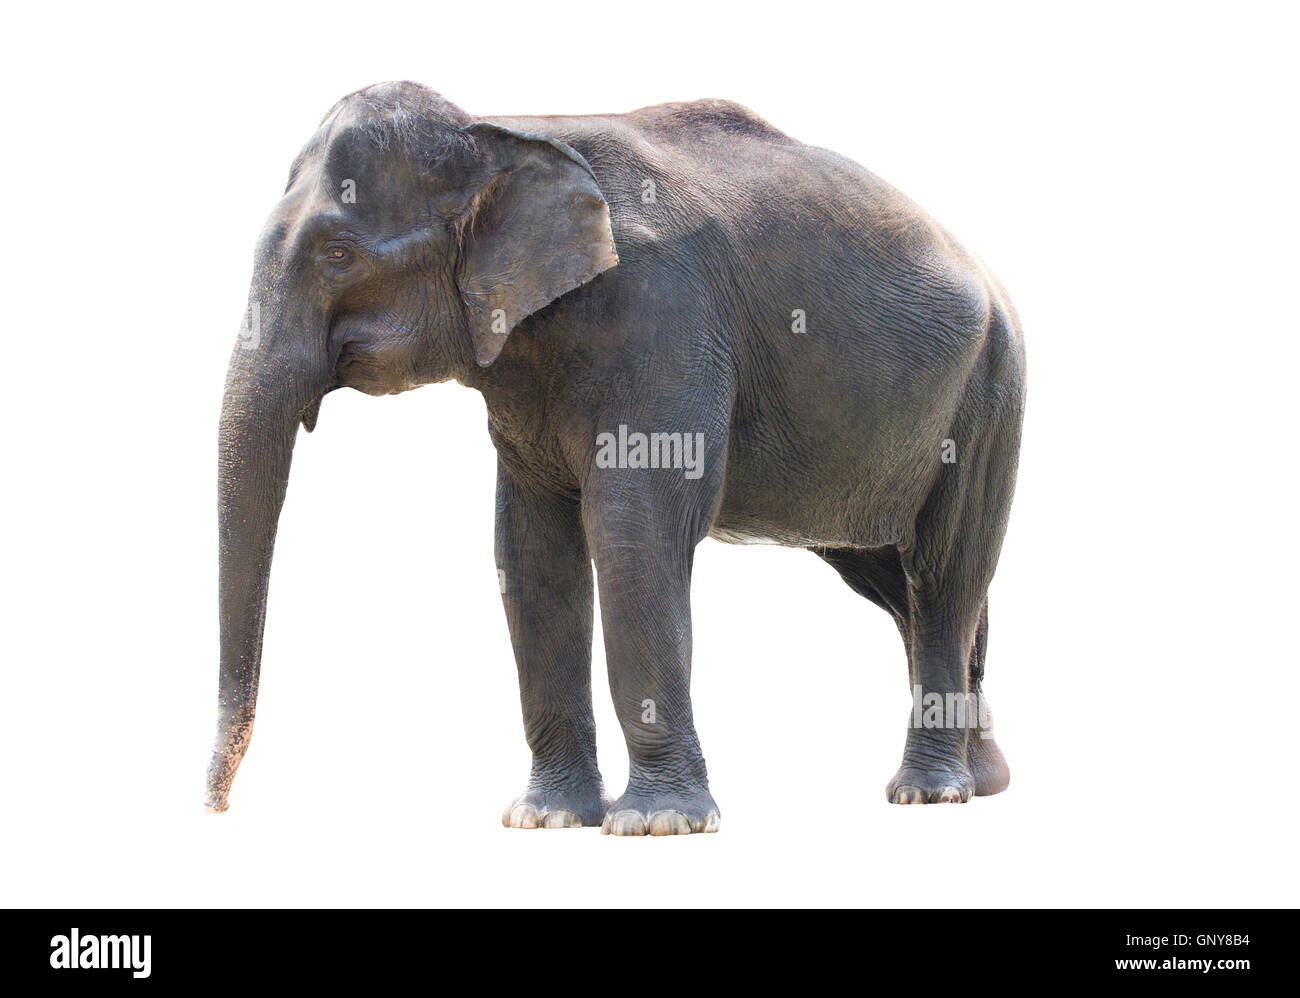 asiatic elephant standing Stock Photo